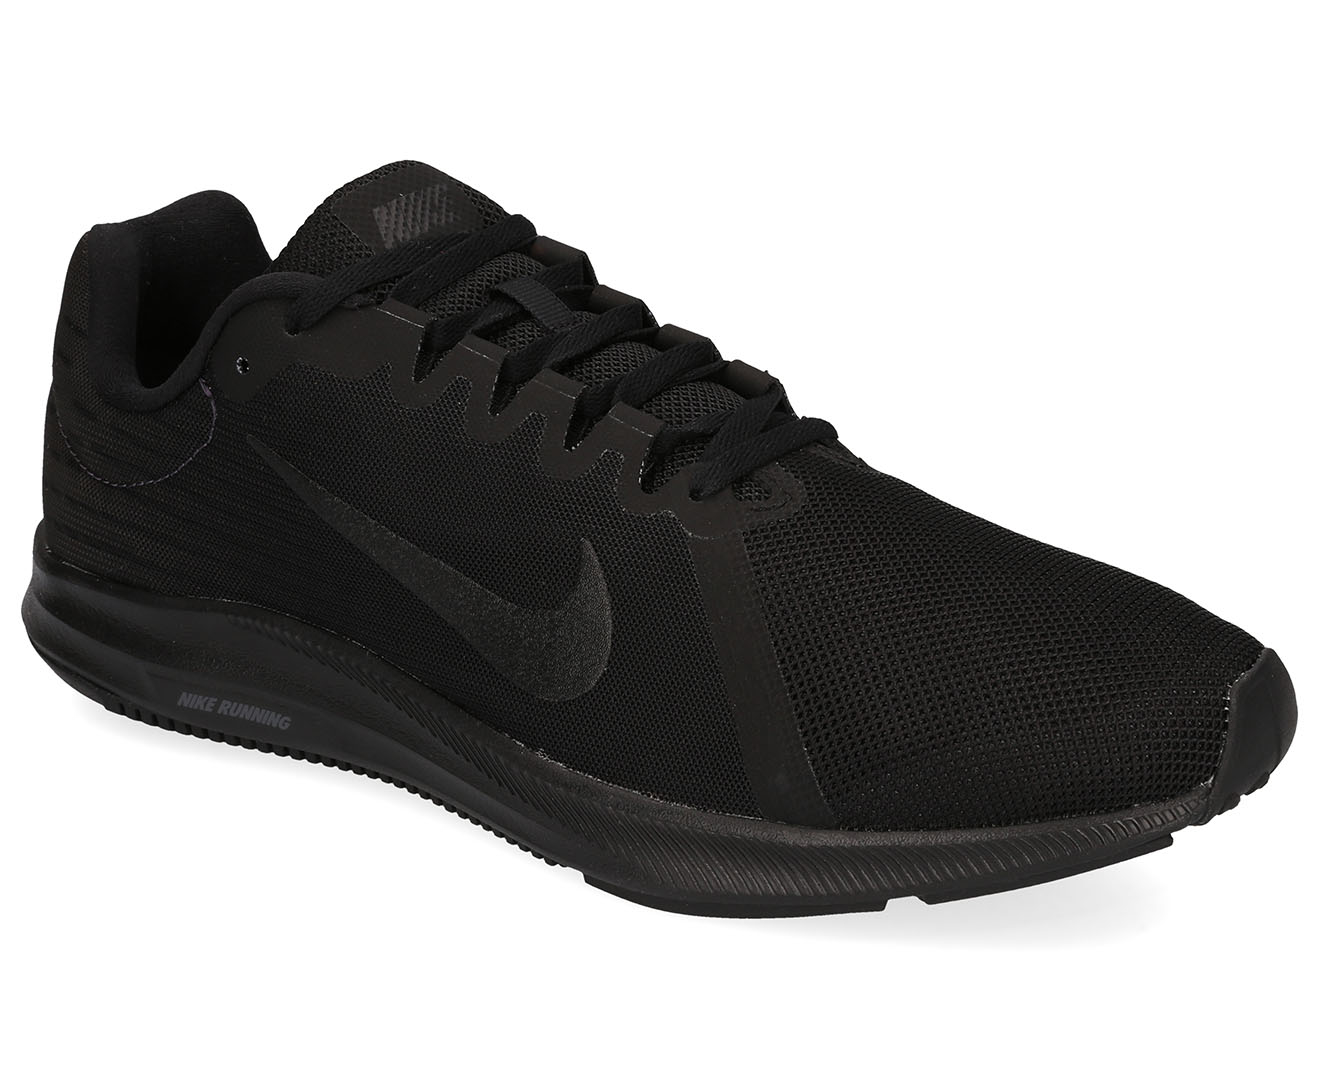 Nike Men's Downshifter 8 Shoe - Black | Catch.co.nz